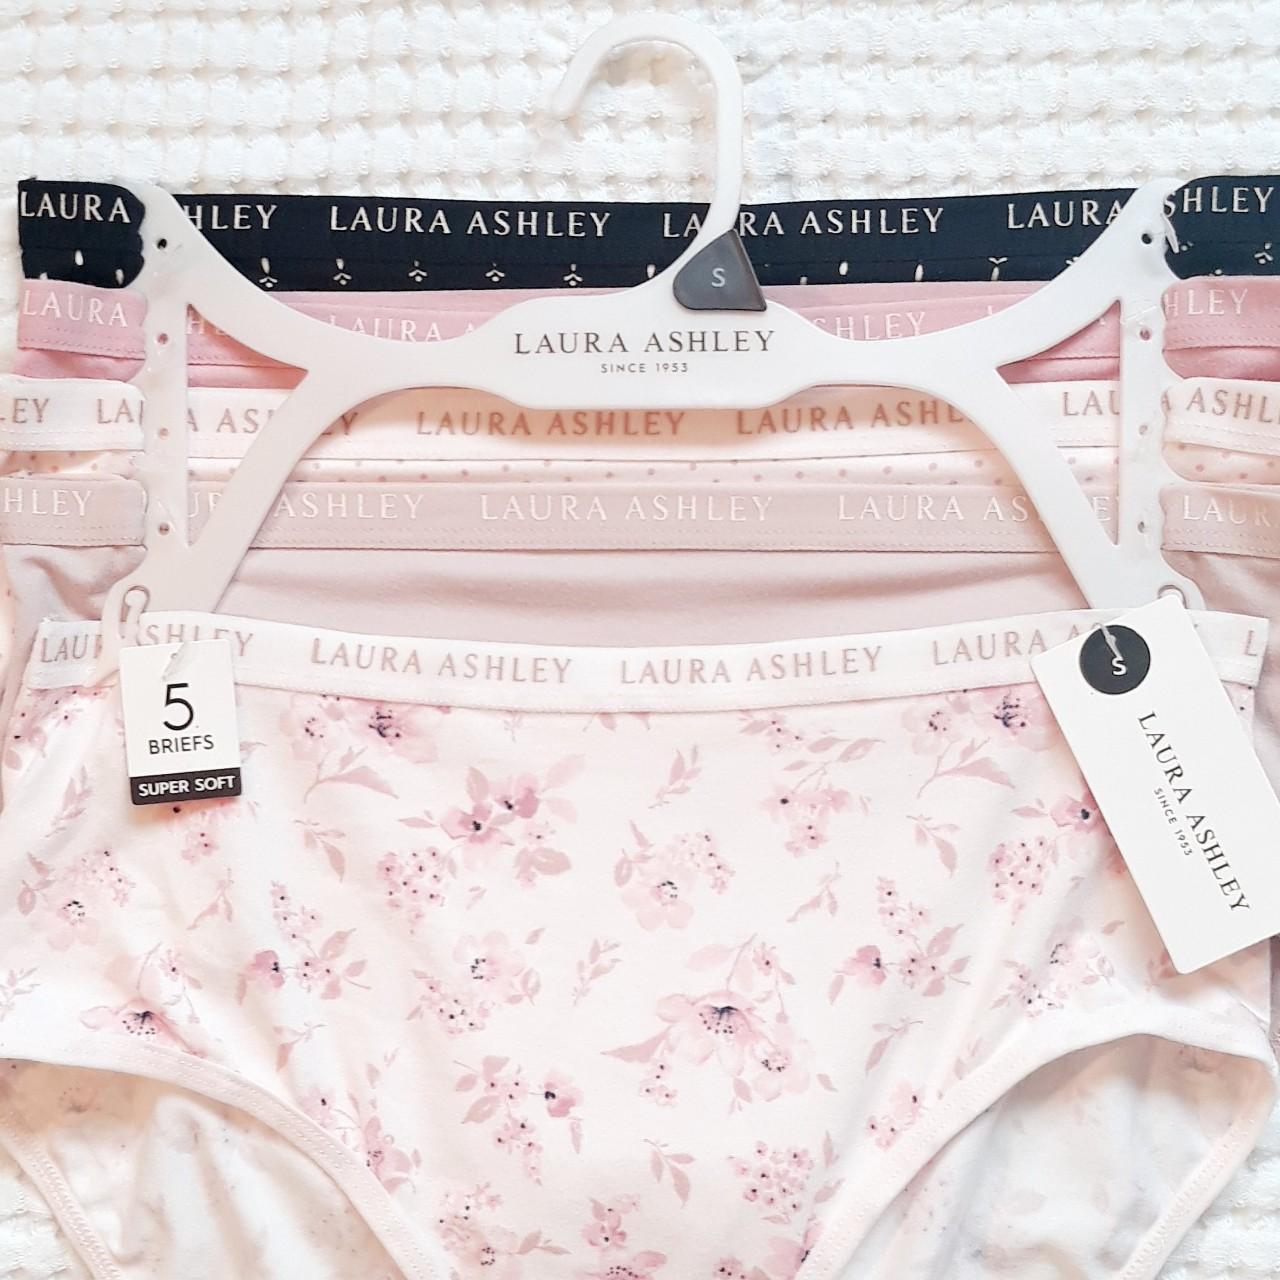 Lura Ashley underwear. - Update your Fashion with Fashion